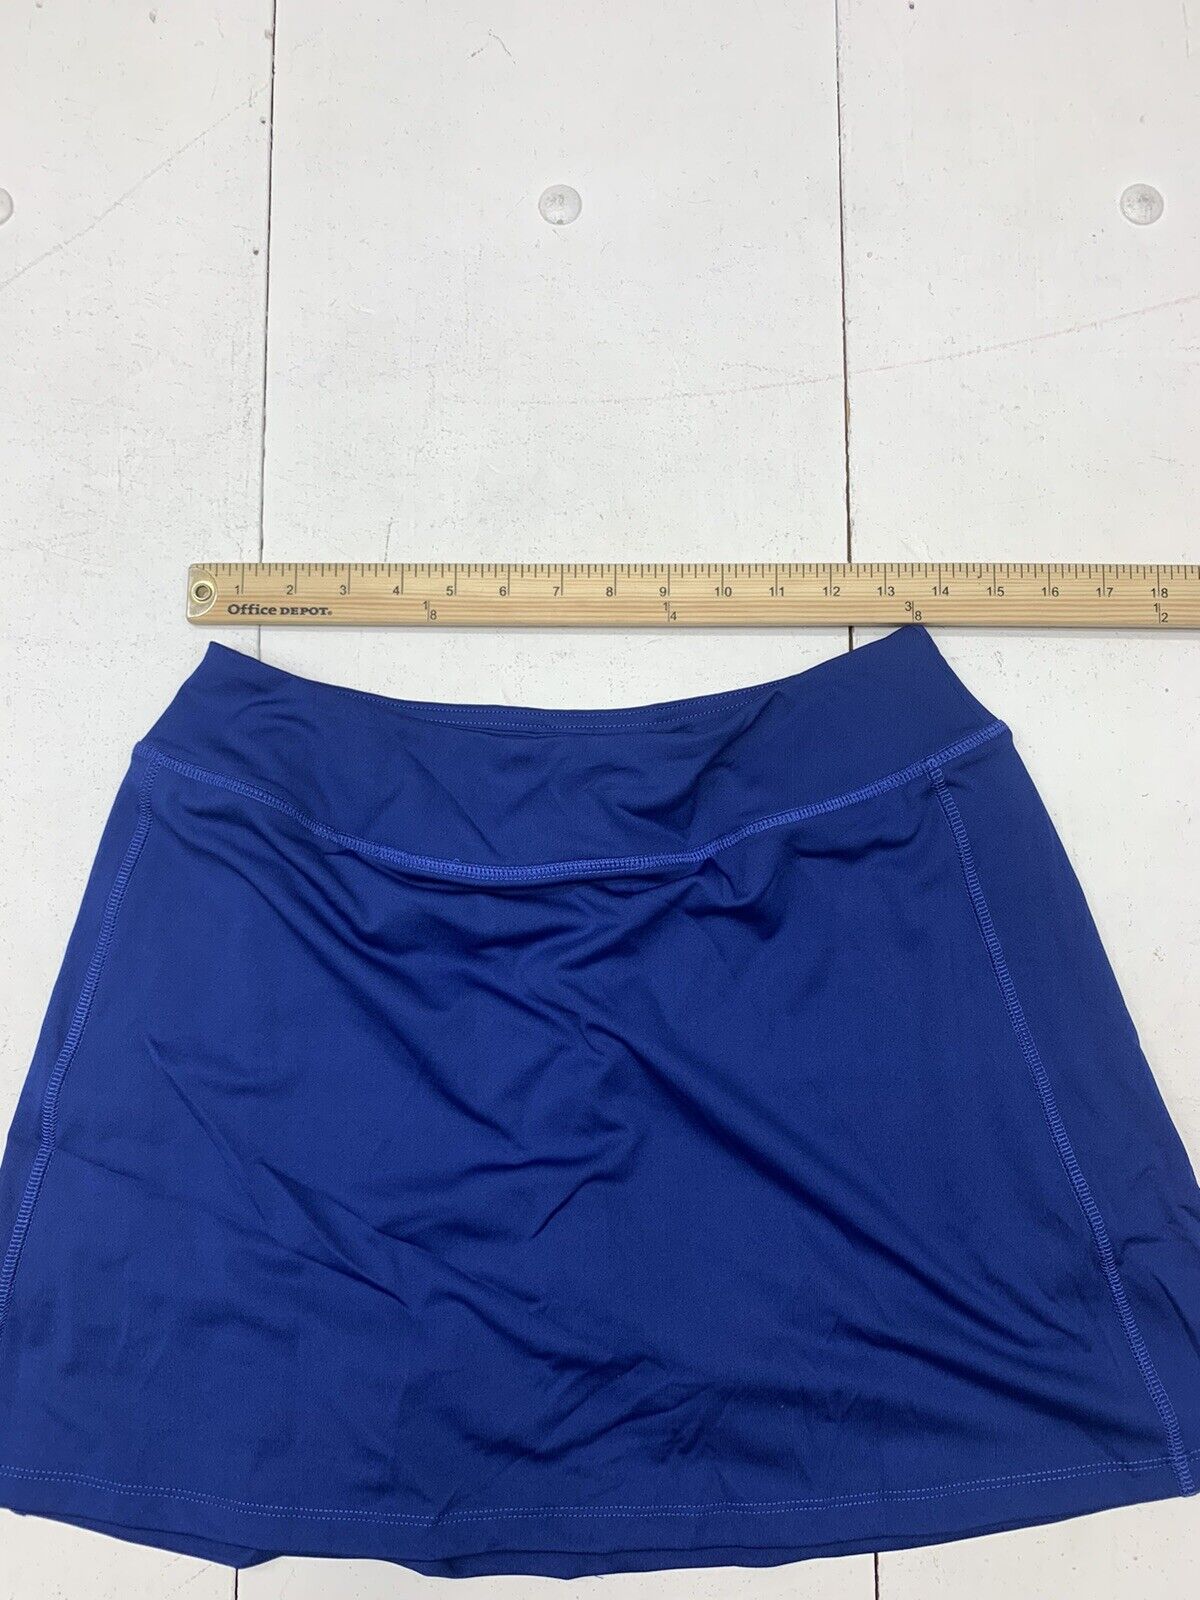 Zealot Power Womens Blue Athletic Skort Size XL - beyond exchange